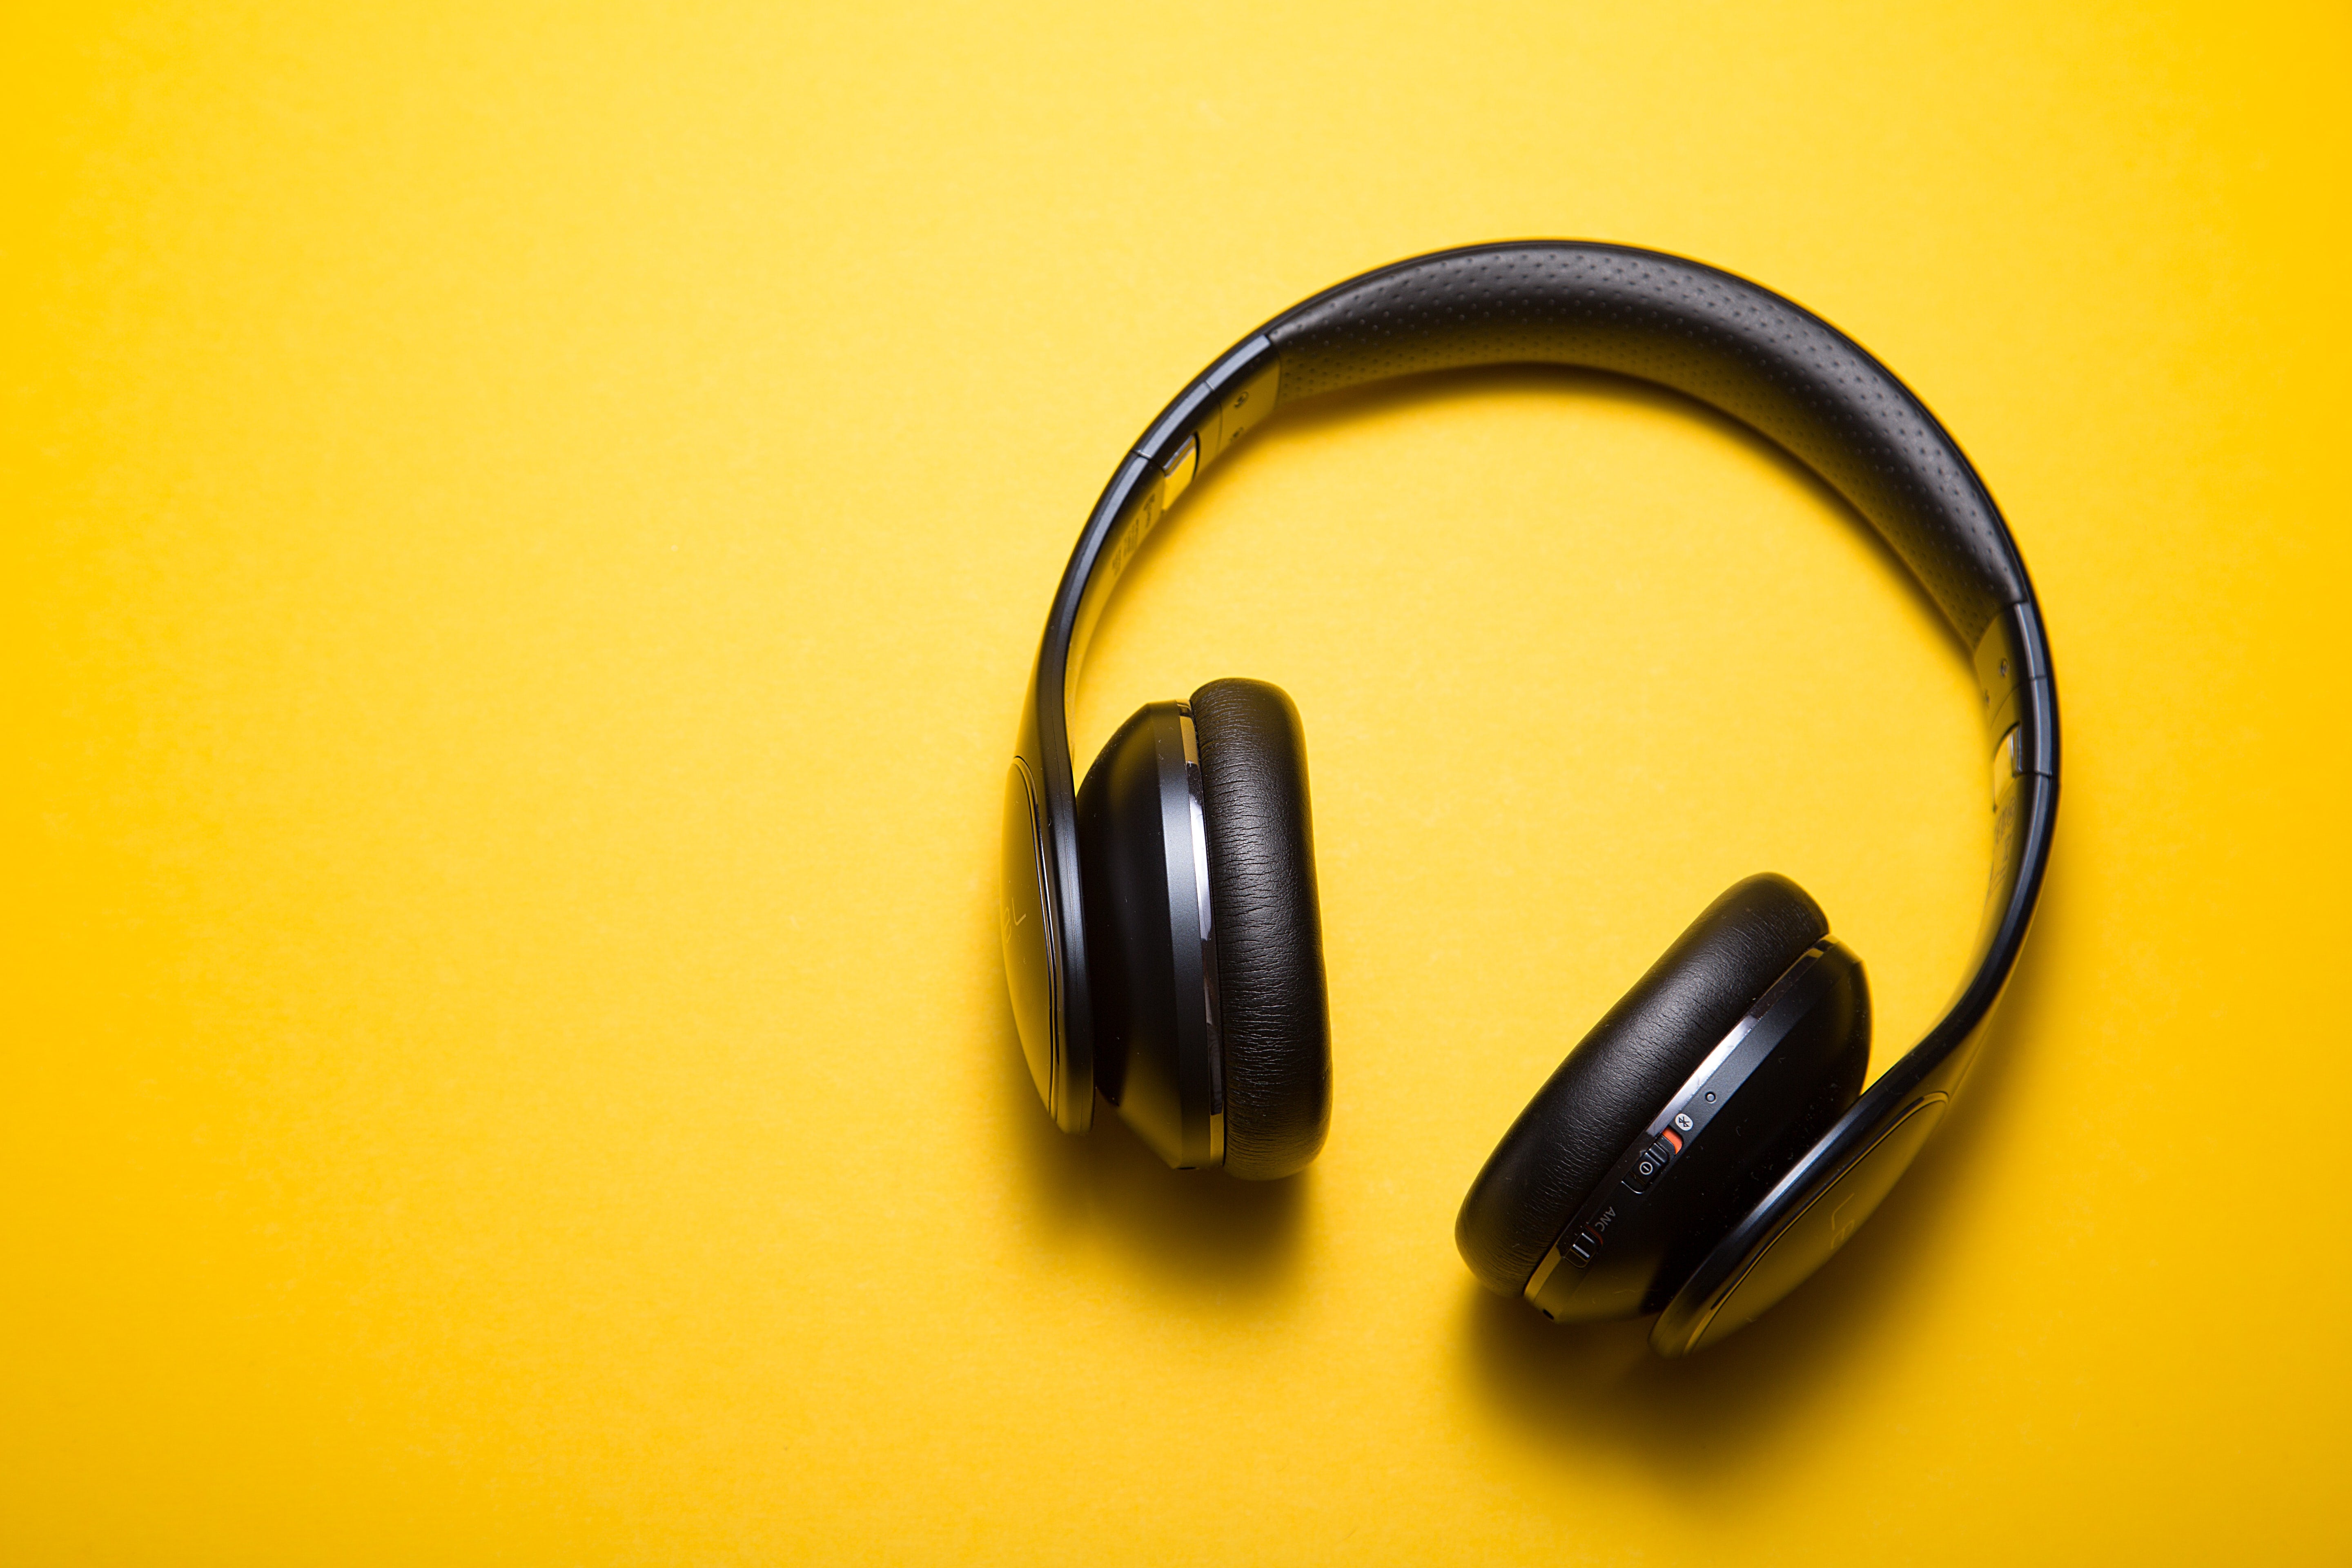 Headphones on a yellow backdrop